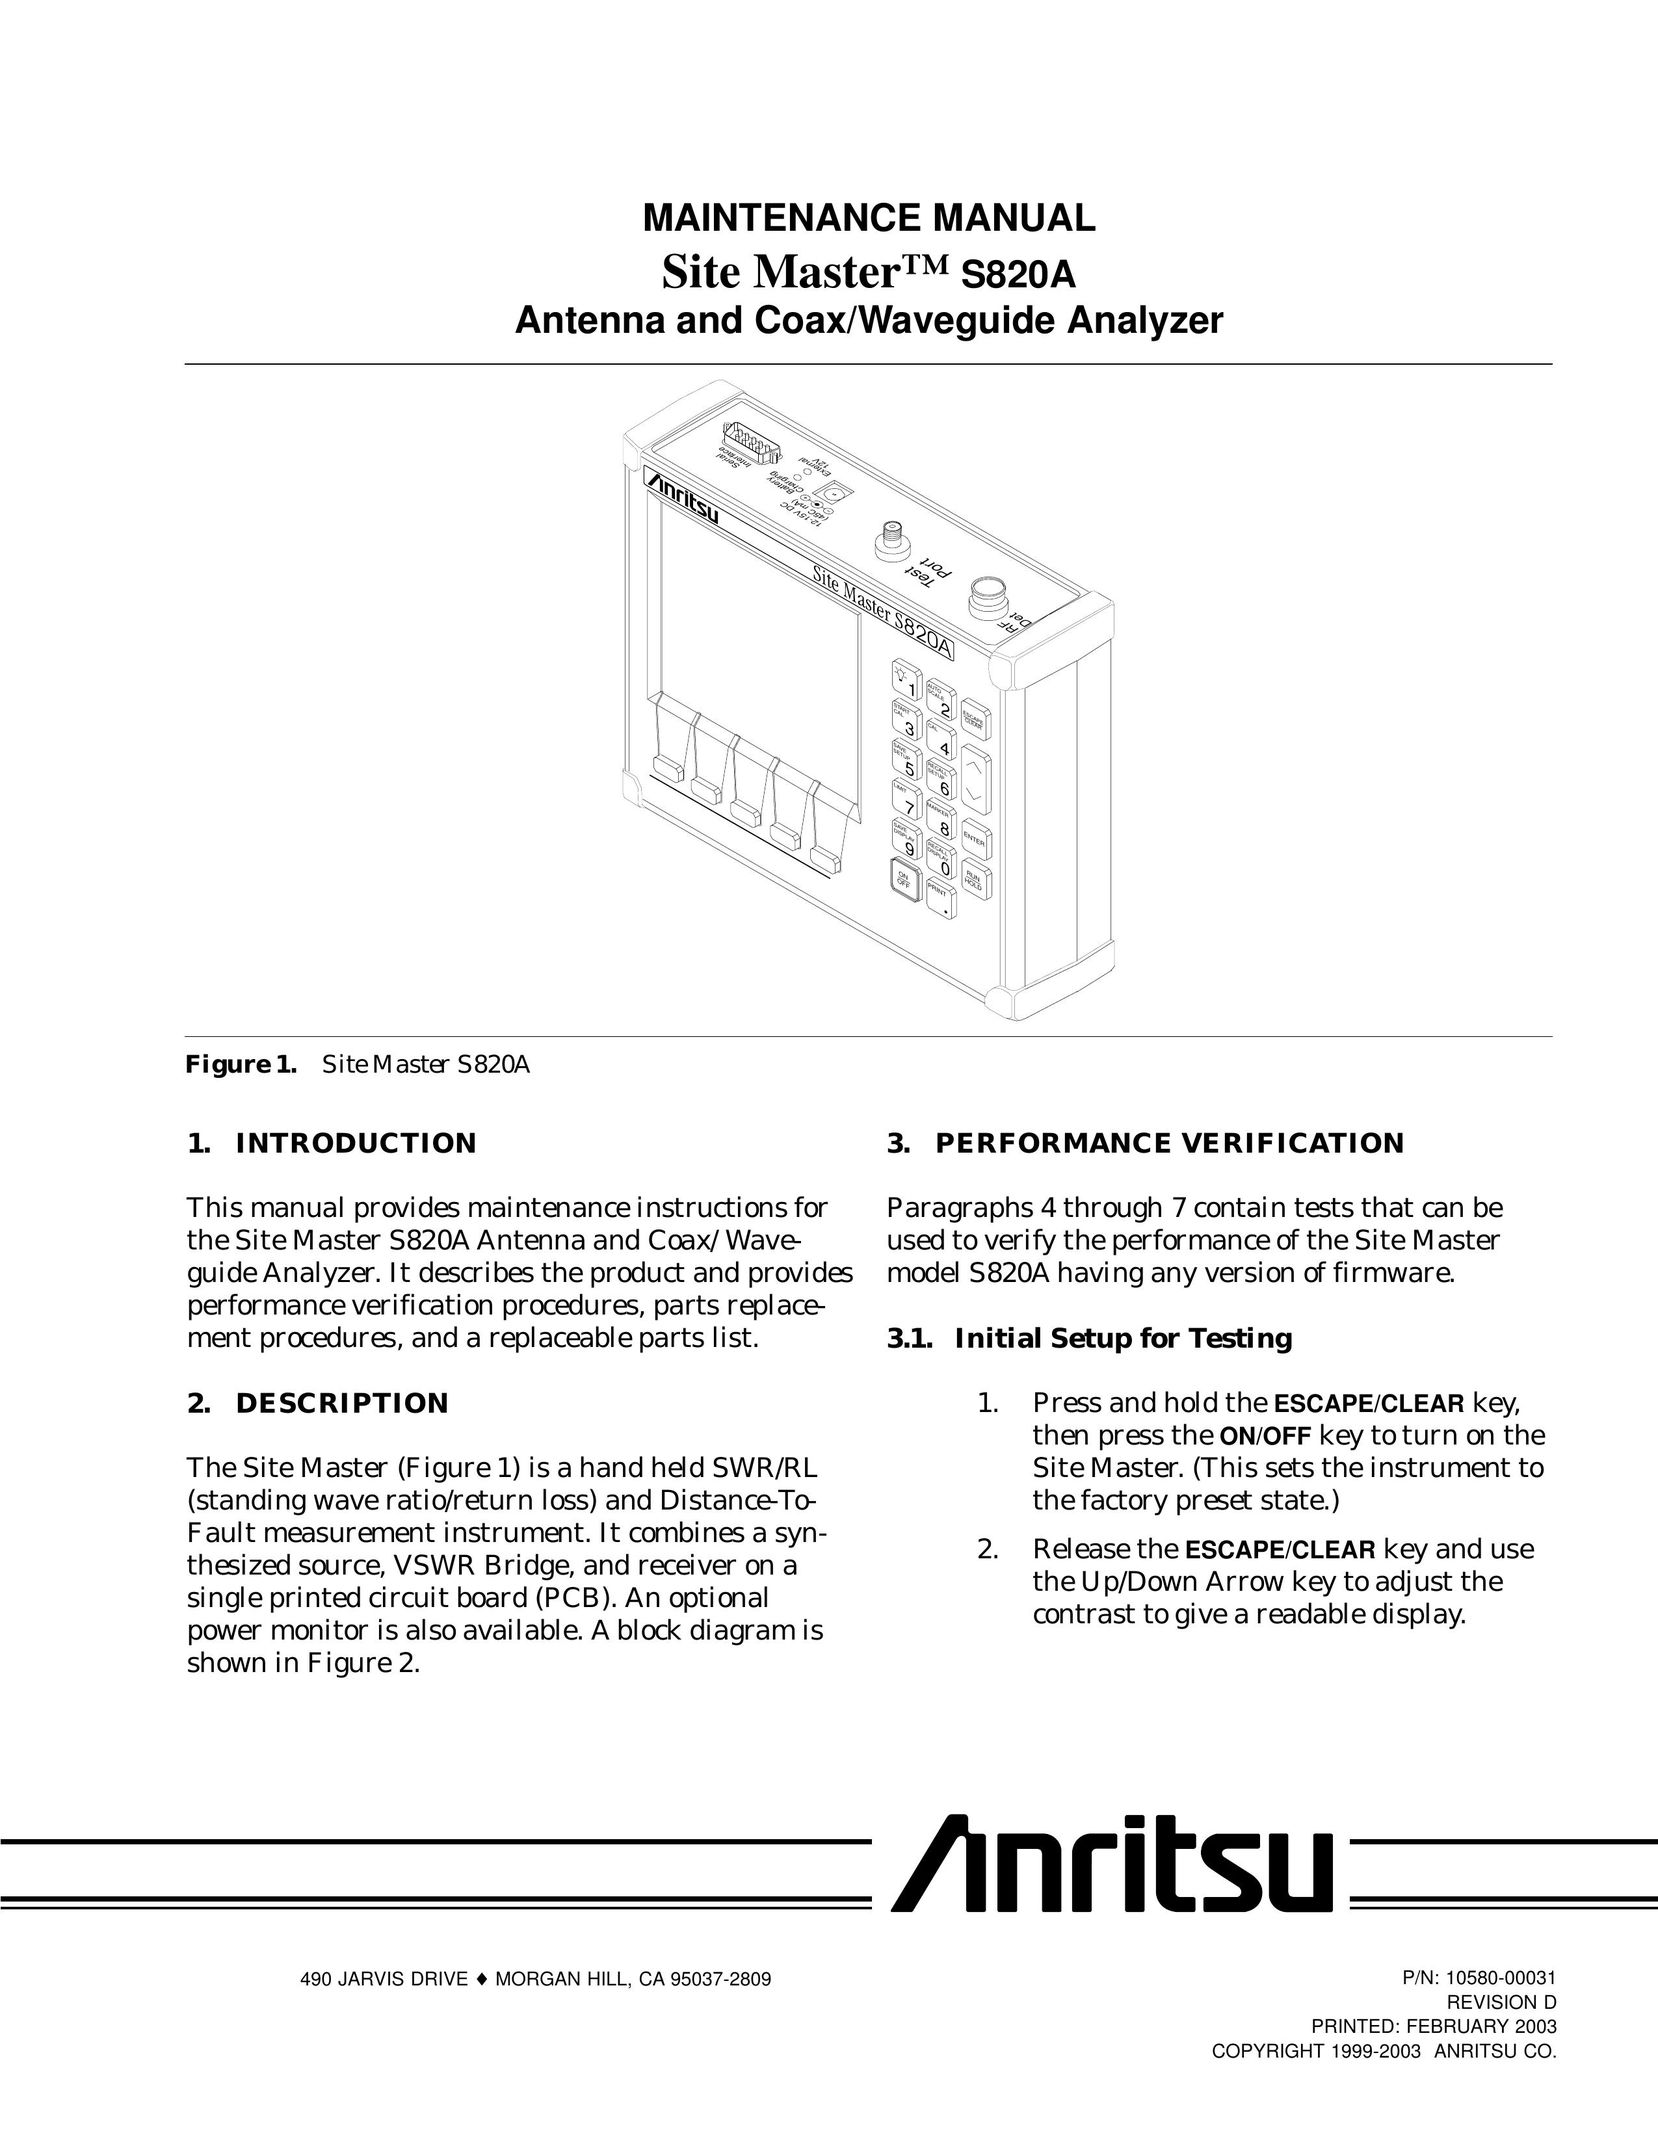 Anritsu S820A Radio Antenna User Manual